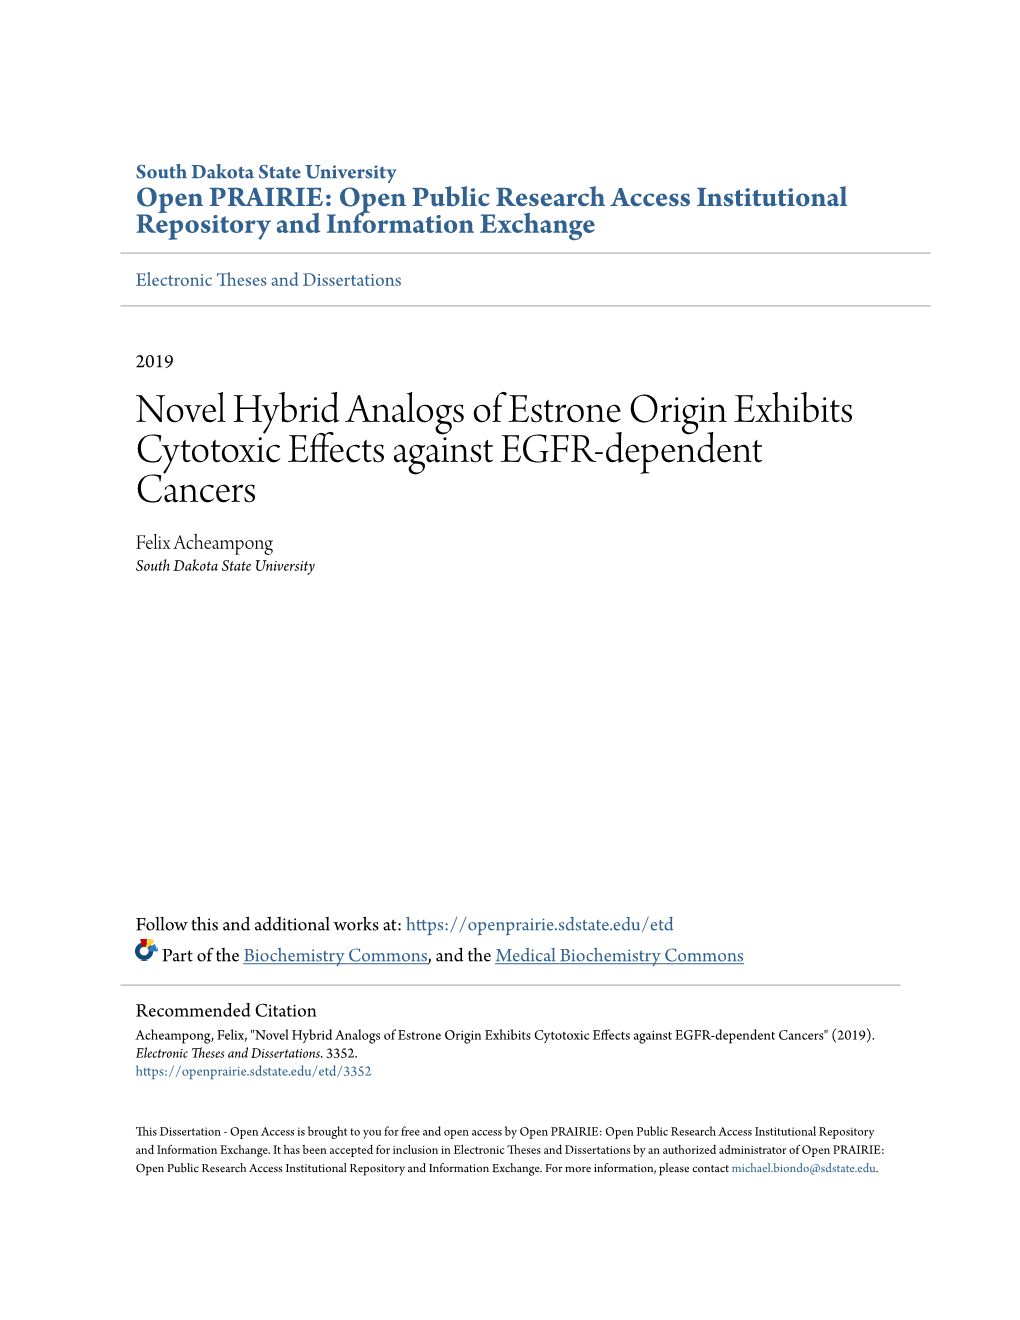 Novel Hybrid Analogs of Estrone Origin Exhibits Cytotoxic Effects Against EGFR-Dependent Cancers Felix Acheampong South Dakota State University